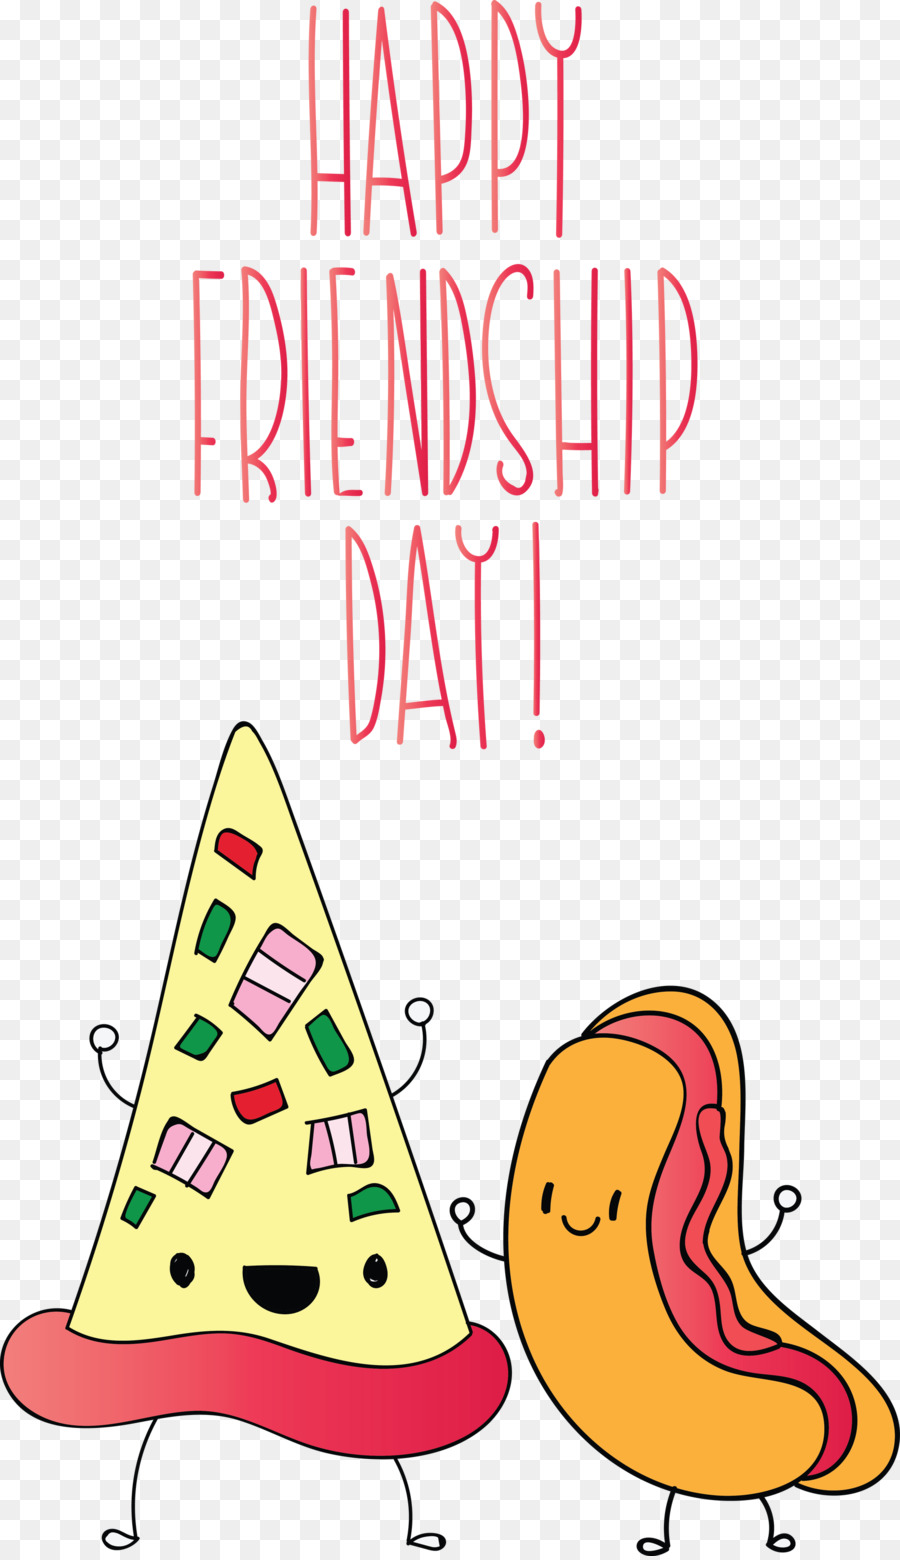 Friendship Day Happy Friendship Day International Friendship Day